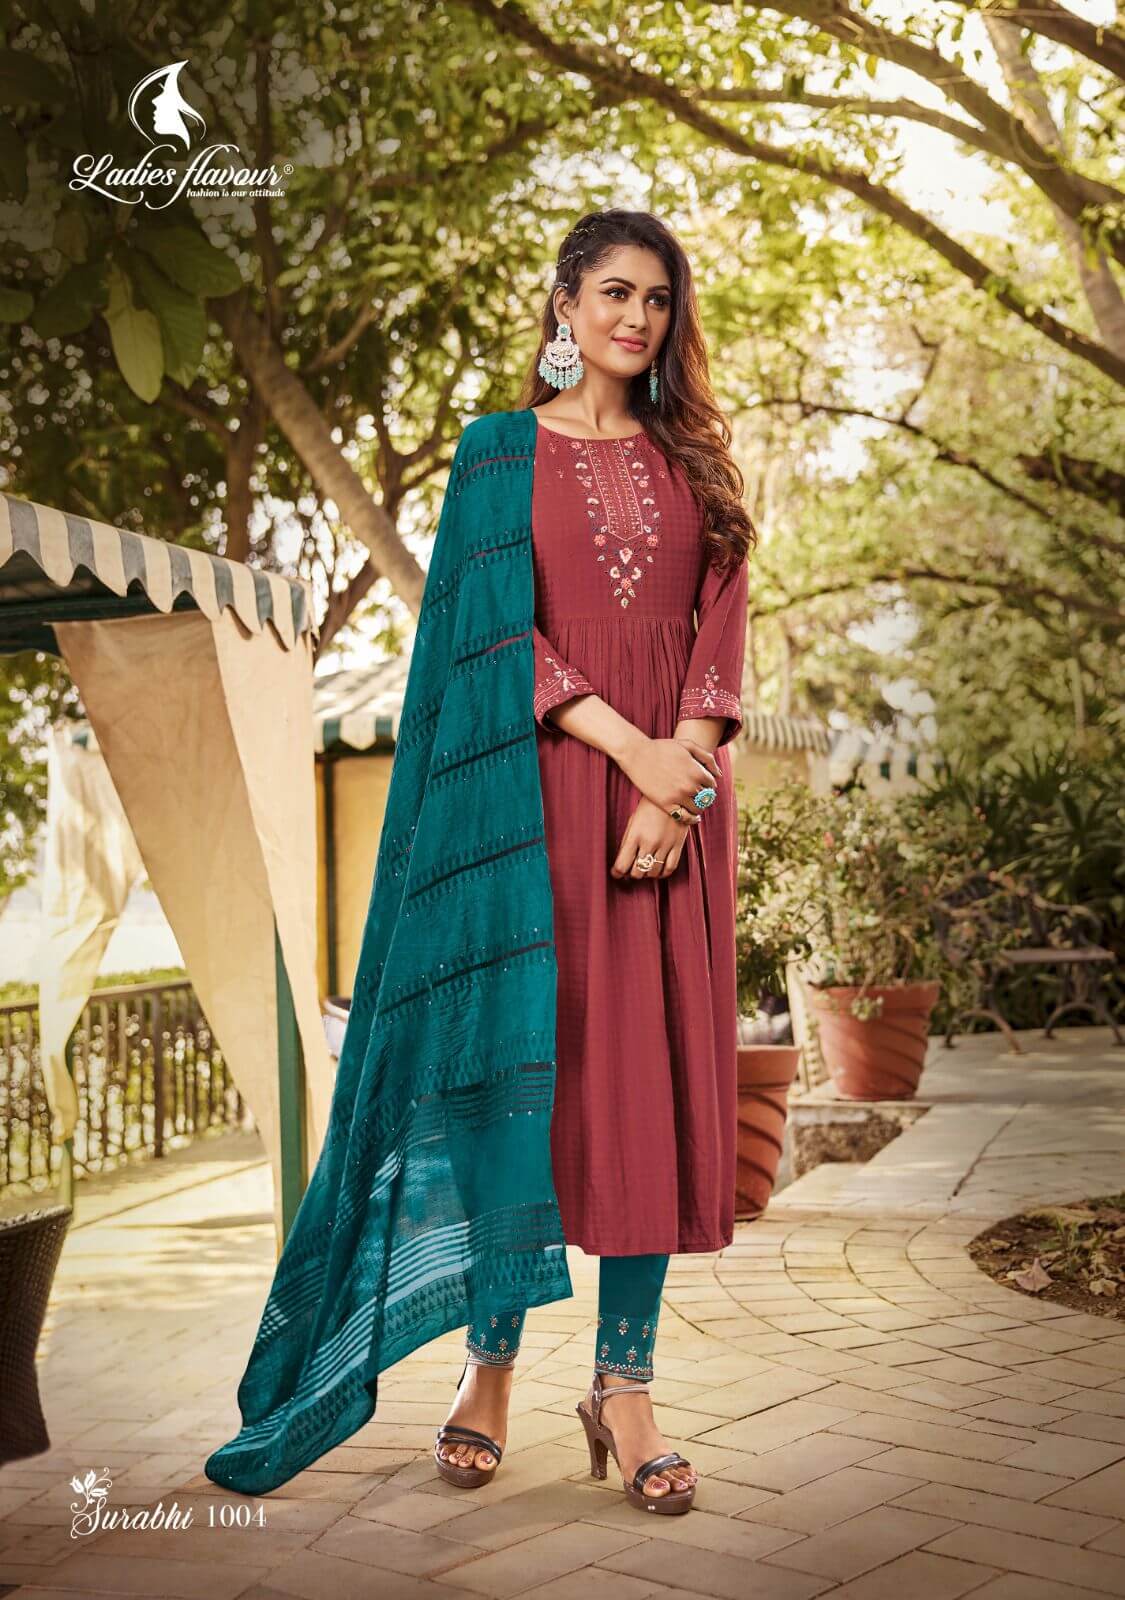 Ladies Flavour Surabhi Designer Wedding Party Salwar Suits collection 1